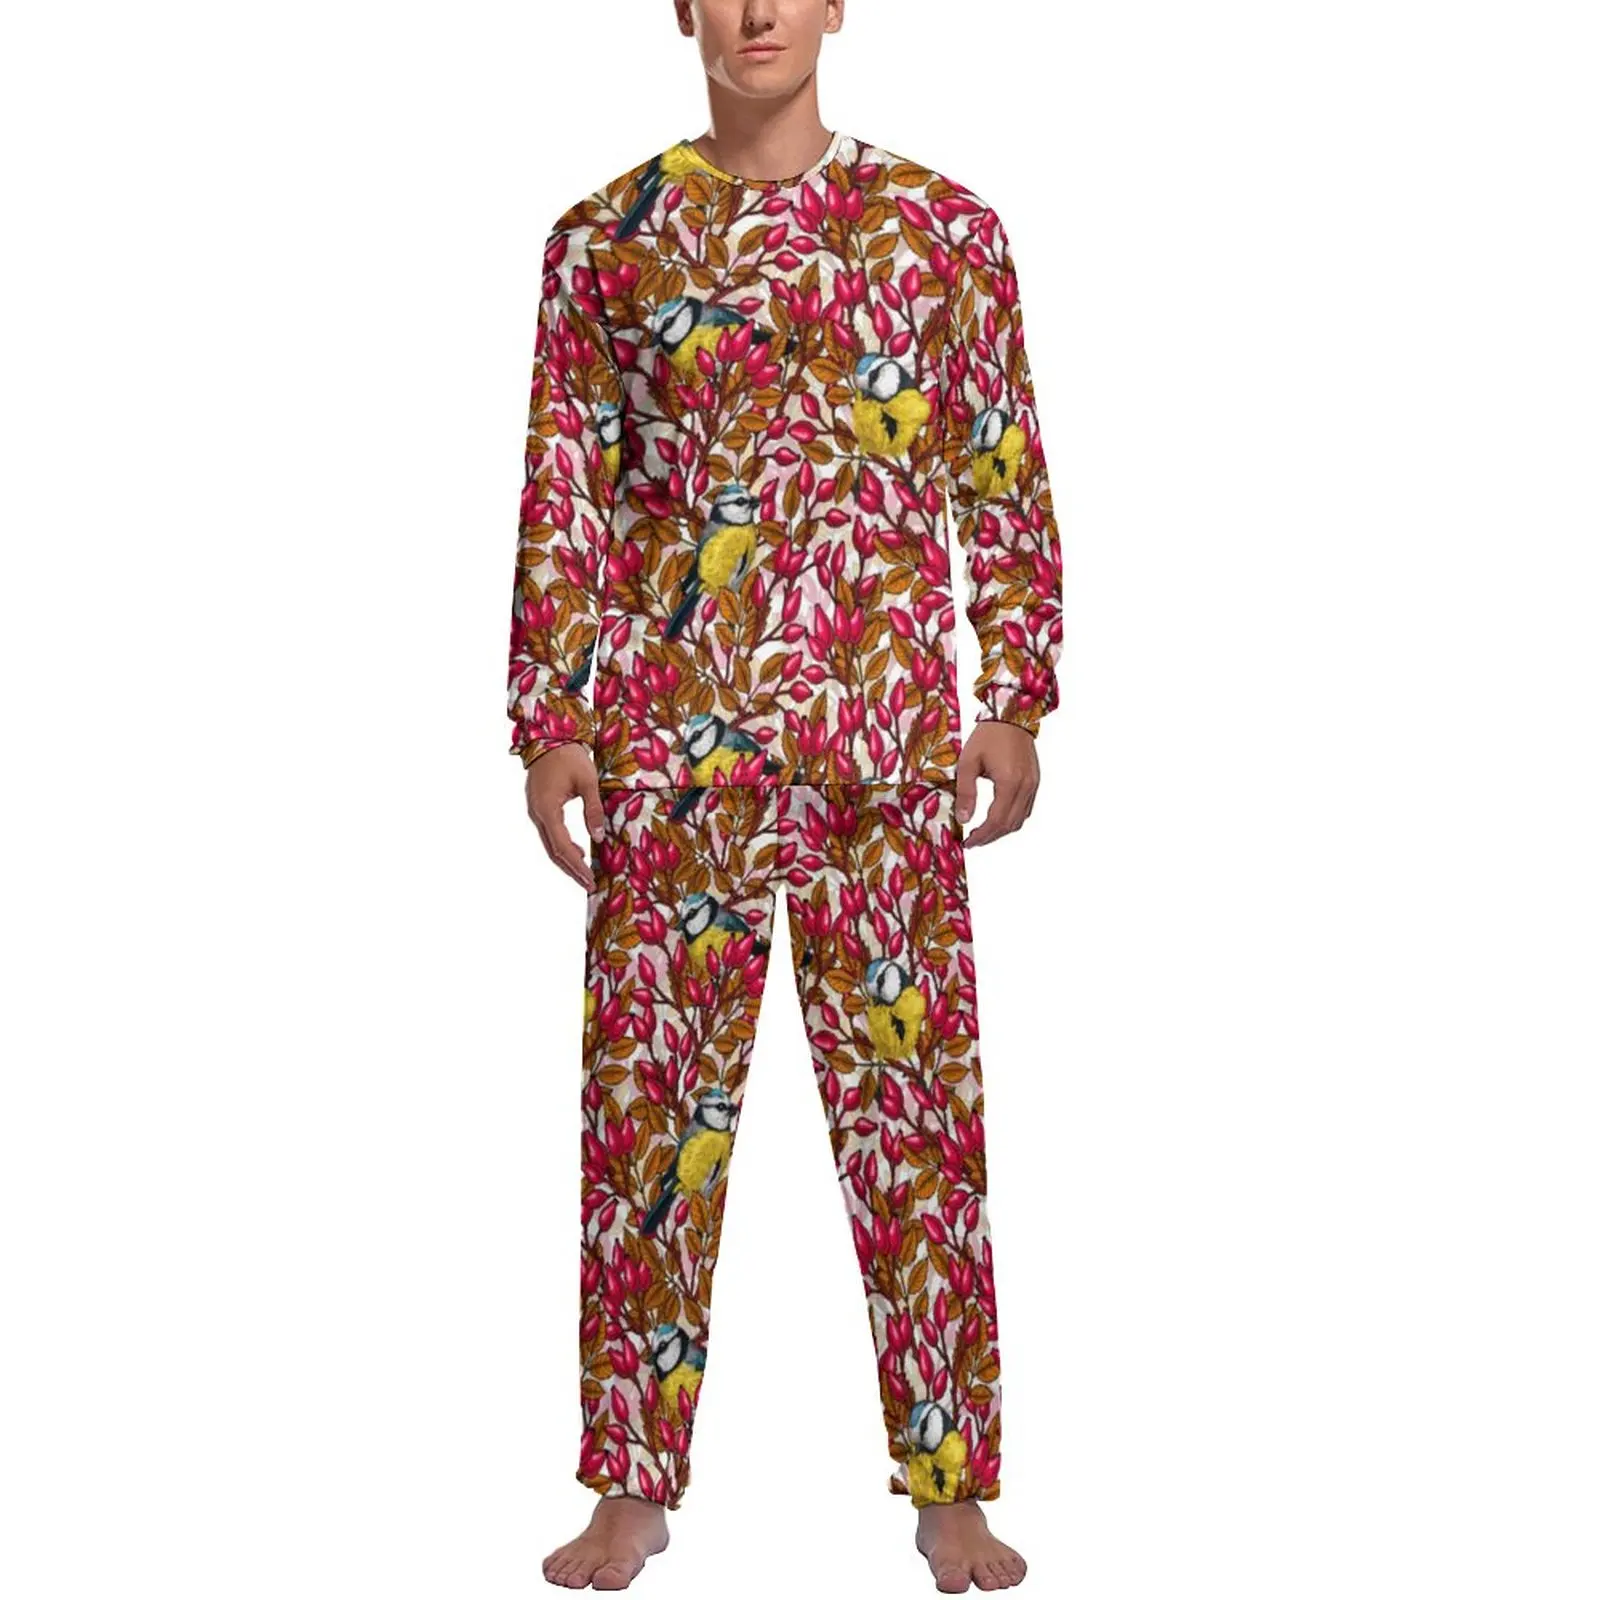 Cute Birds Pajamas Winter Dog Rose Hips Leisure Nightwear Man 2 Pieces Pattern Long Sleeve Warm Pajama Sets